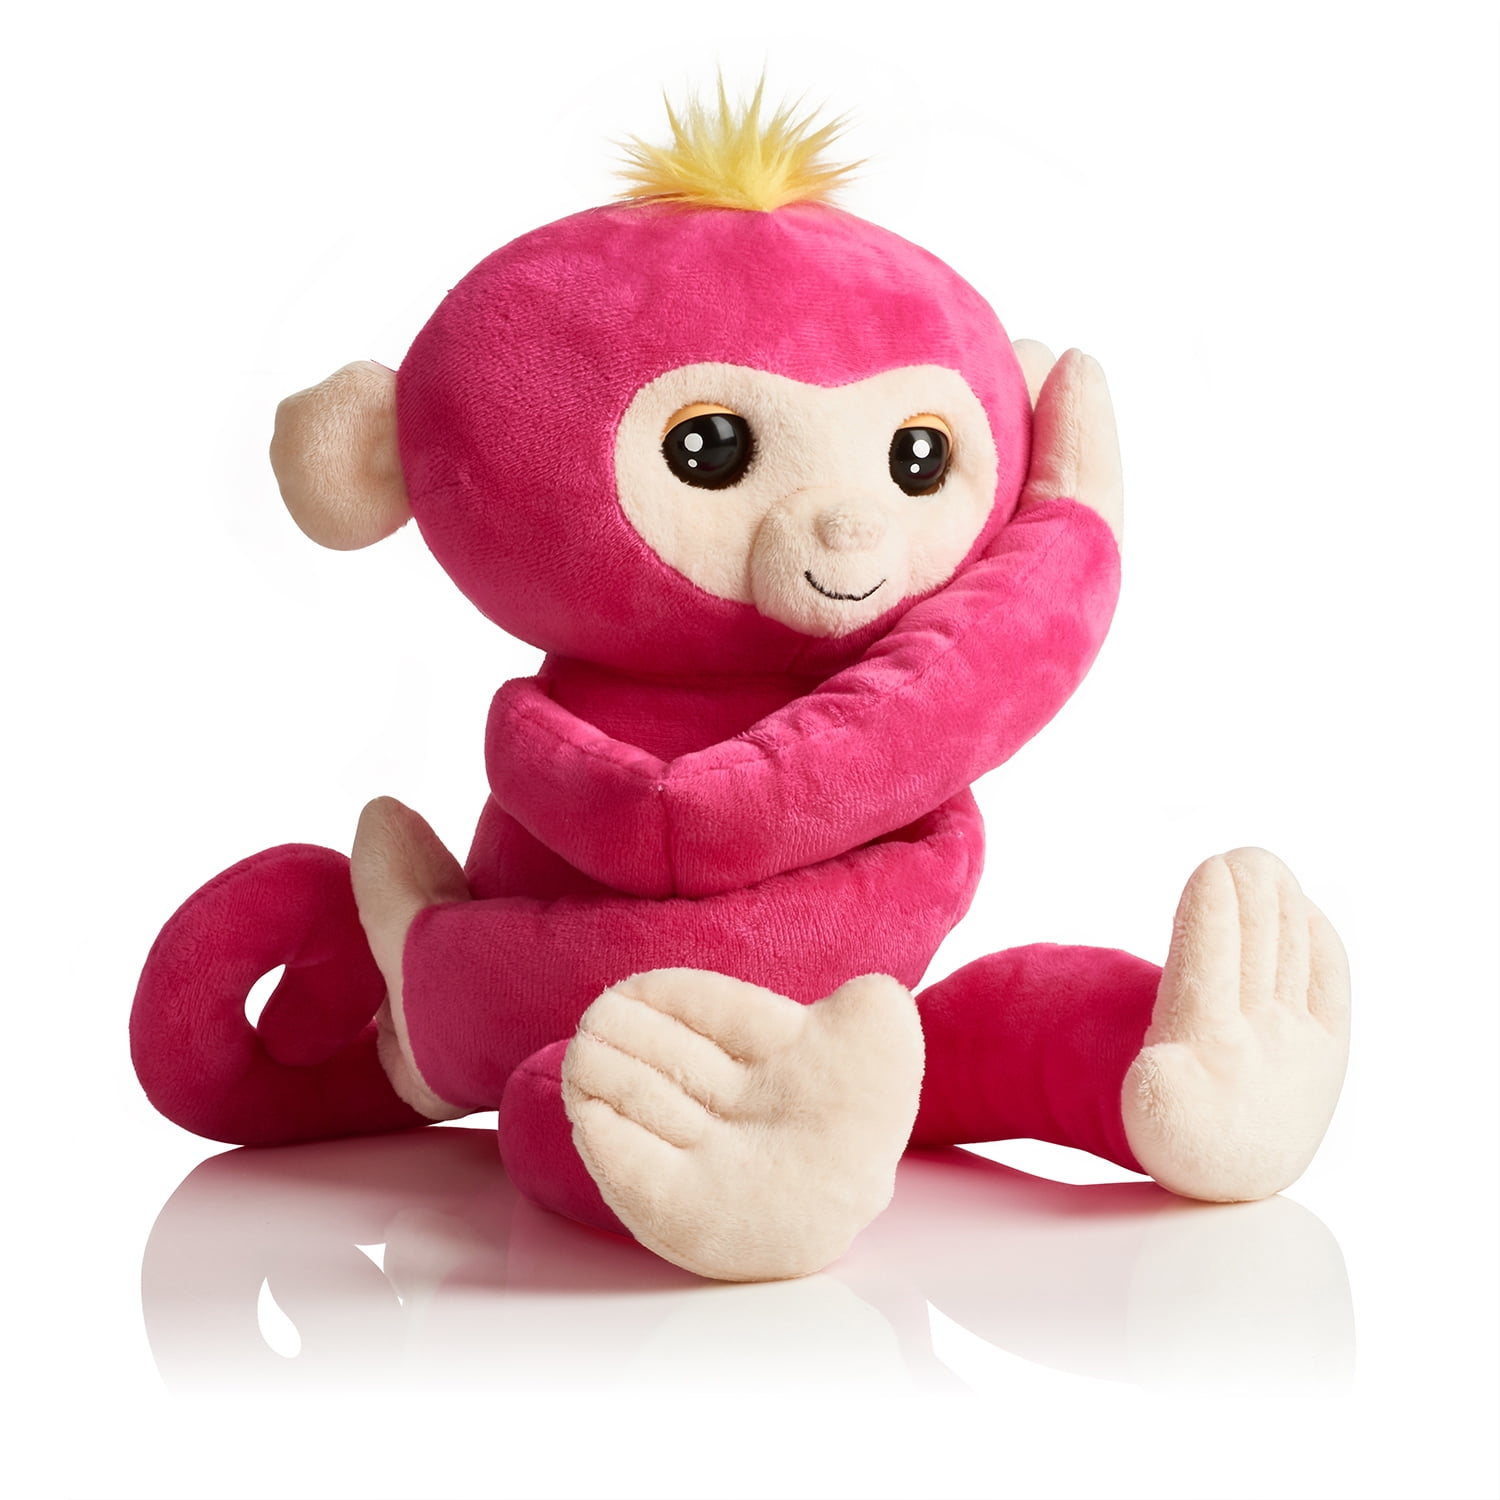 Interactive 40 Sounds Fingerlings Hugs Boris Blue Plush Baby Monkey WowWee for sale online 